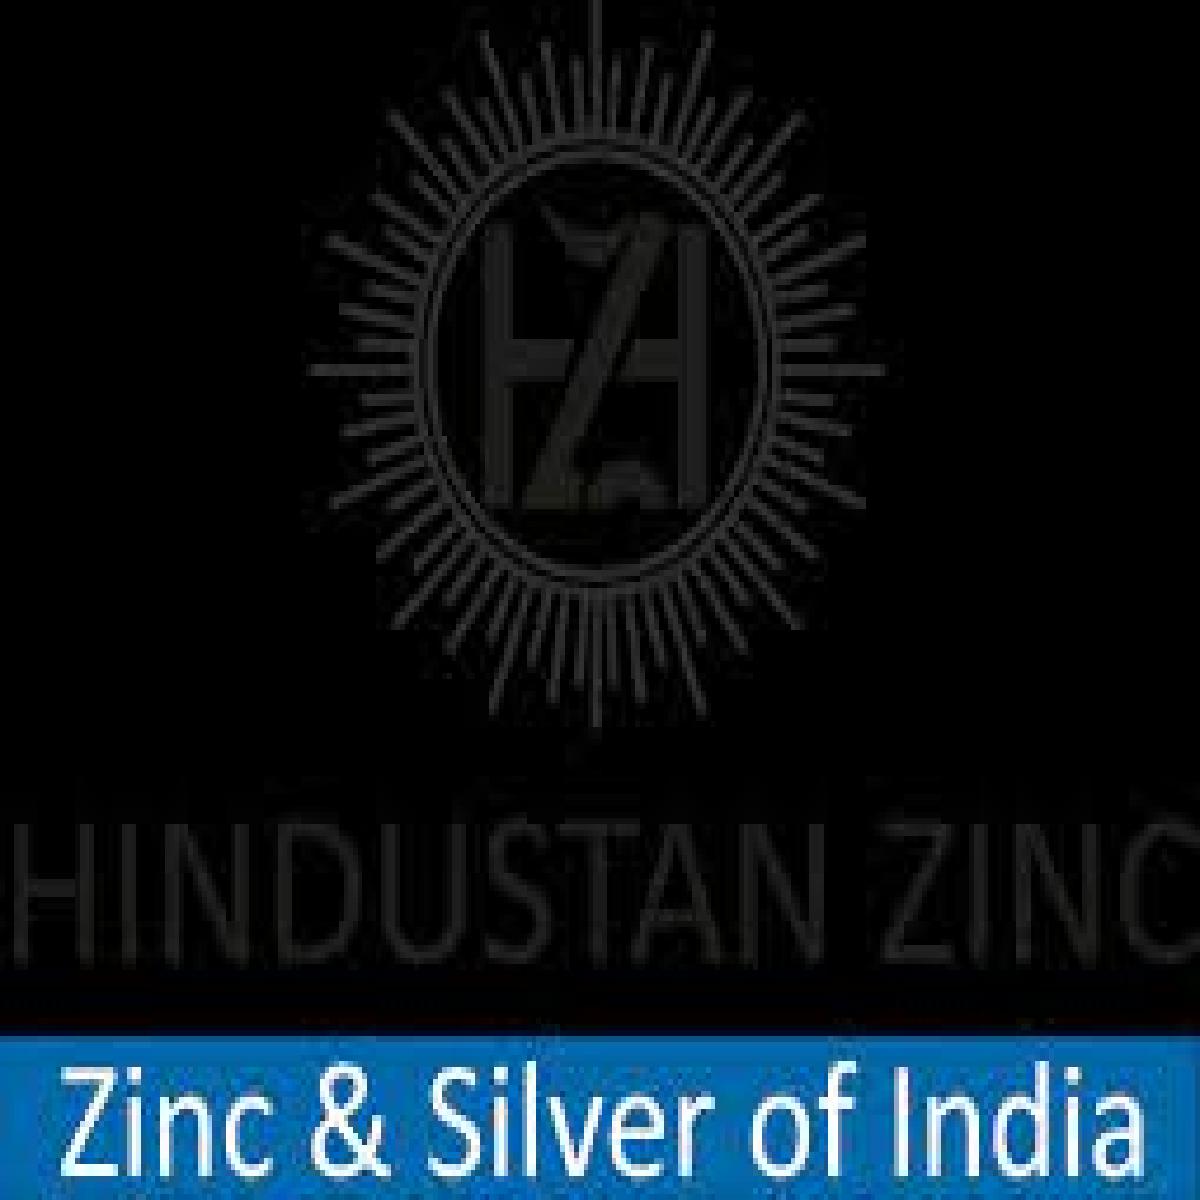 Hindustan Zinc’s Integrated Annual Report Ranks 40 Worldwide at LACP Spotlight Awards 2022